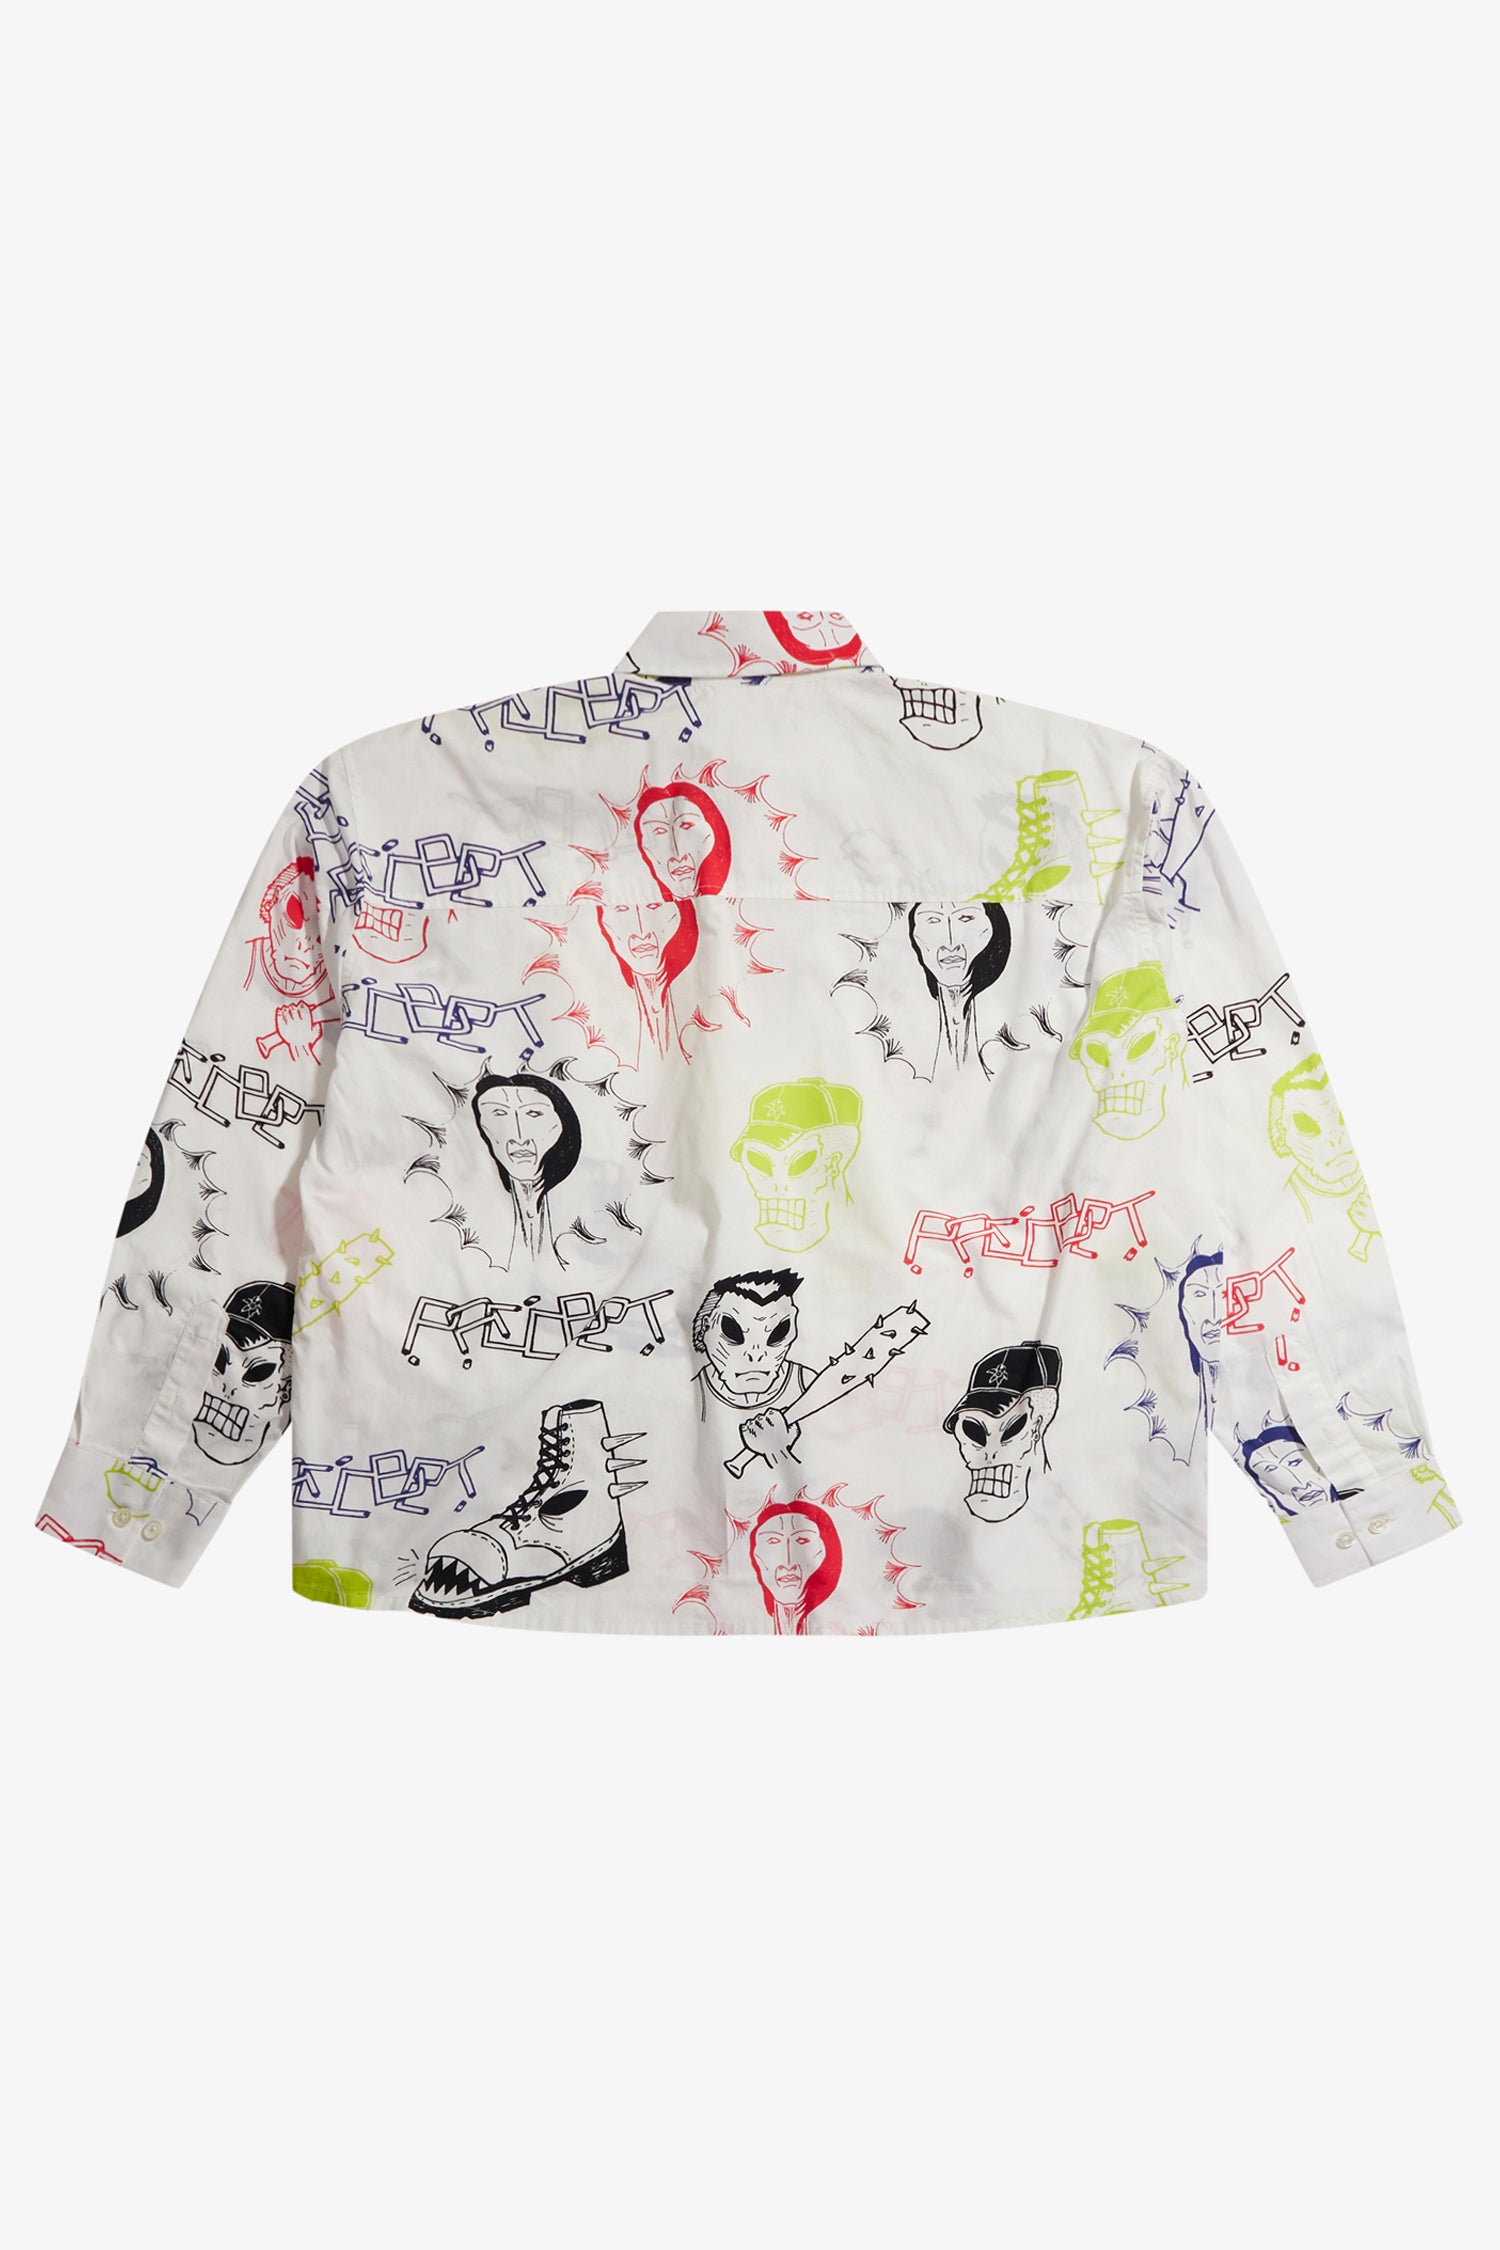 Selectshop FRAME - RASSVET HARDCORE Printed Shirt Shirts Dubai